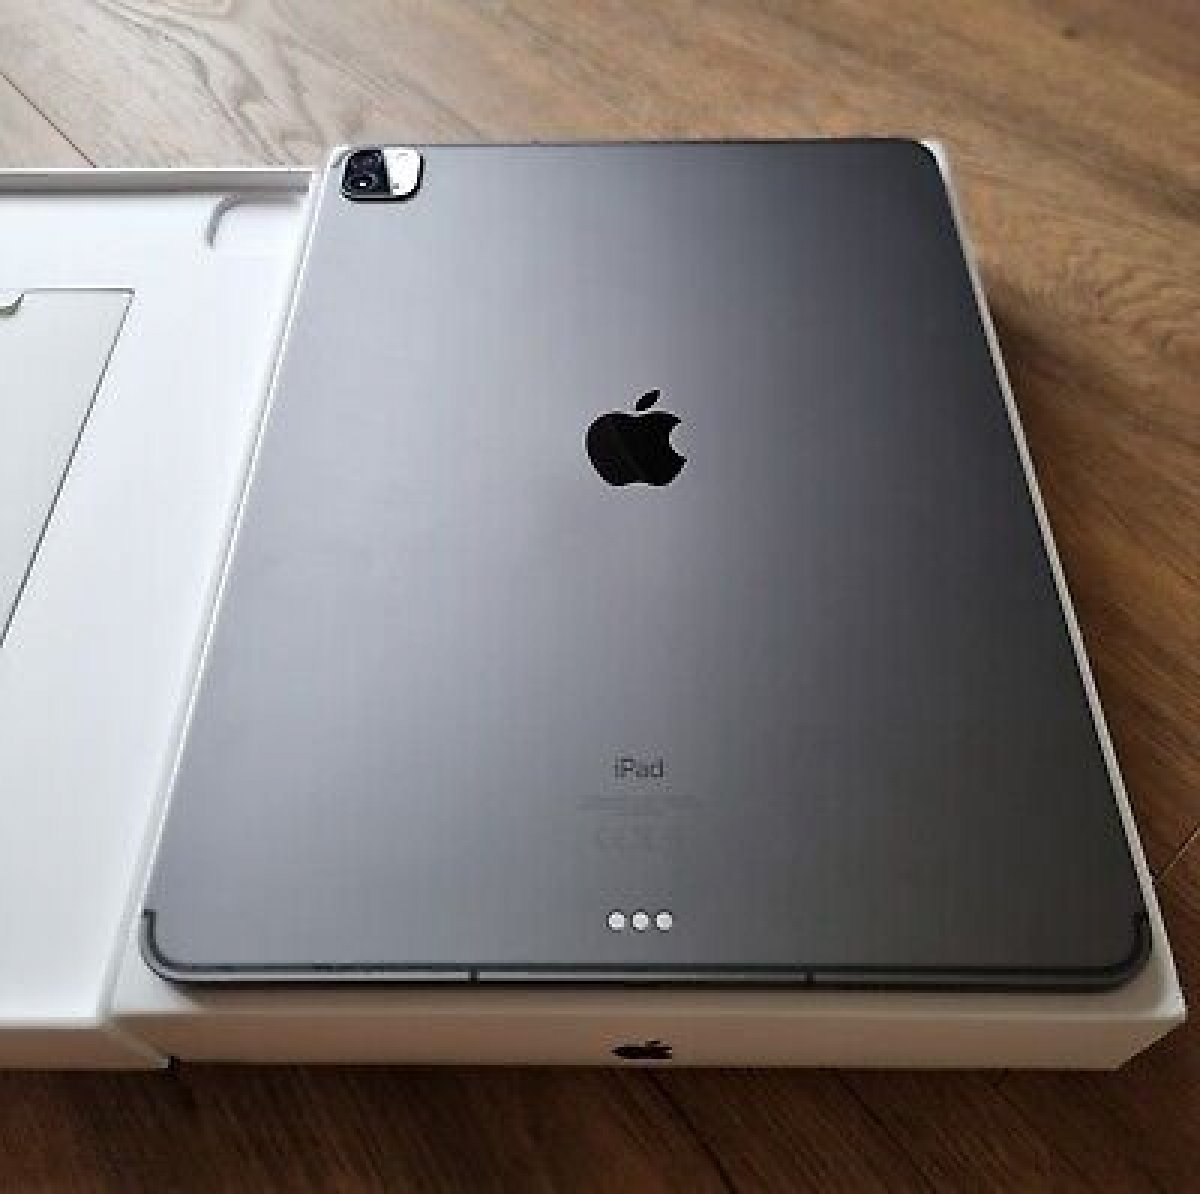 Nowość w pudełku Apple iPad Pro 2TB 12,9 cala (5. generacji) Whatsapp : +1 319-5